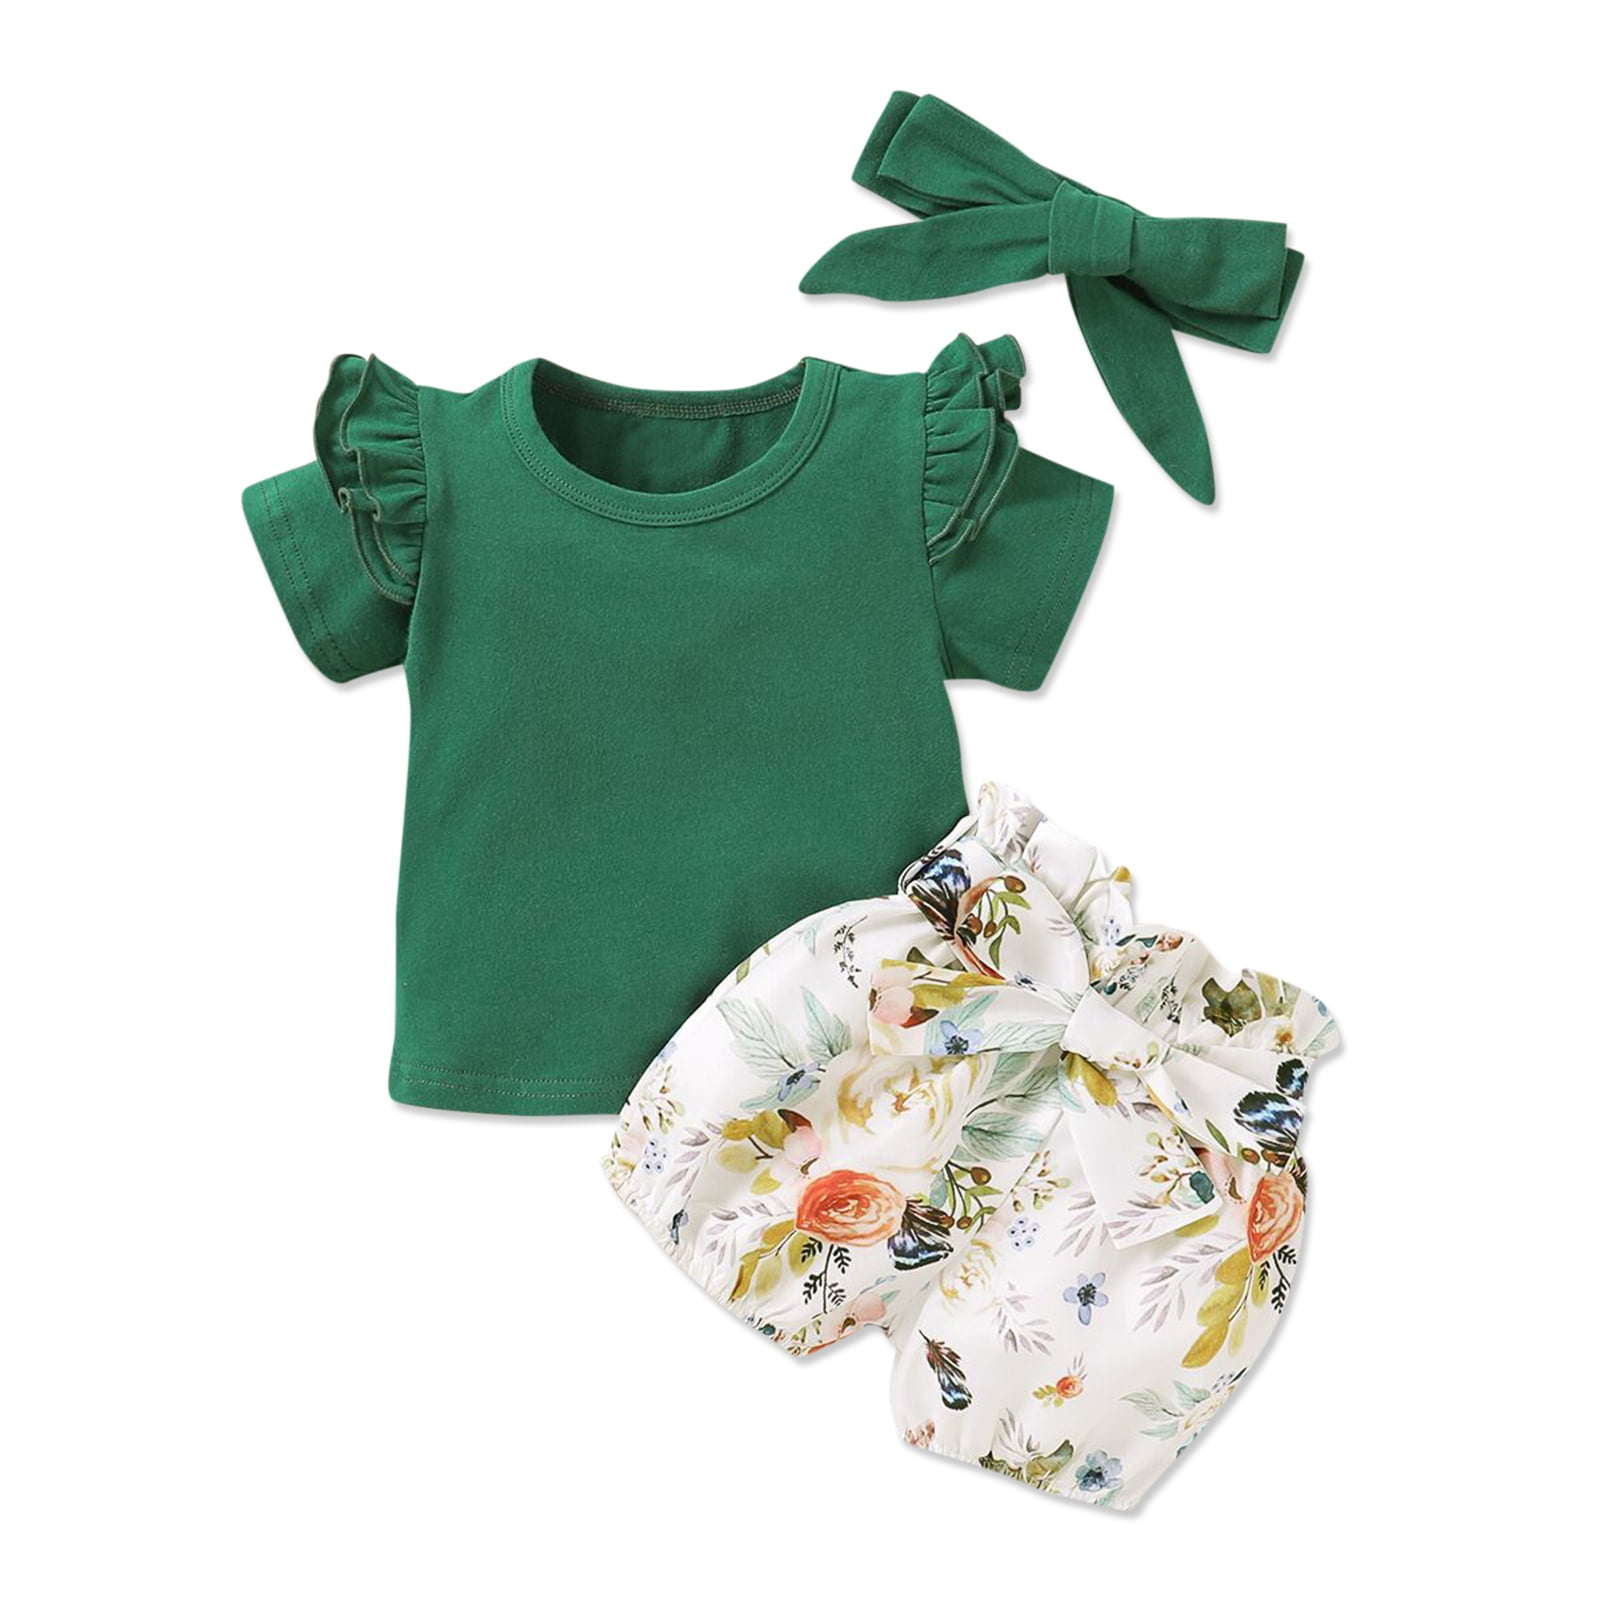 PatPat 100% Cotton 3pcs Summer Baby Outfit Set,Short Sleeve Solid Color ...